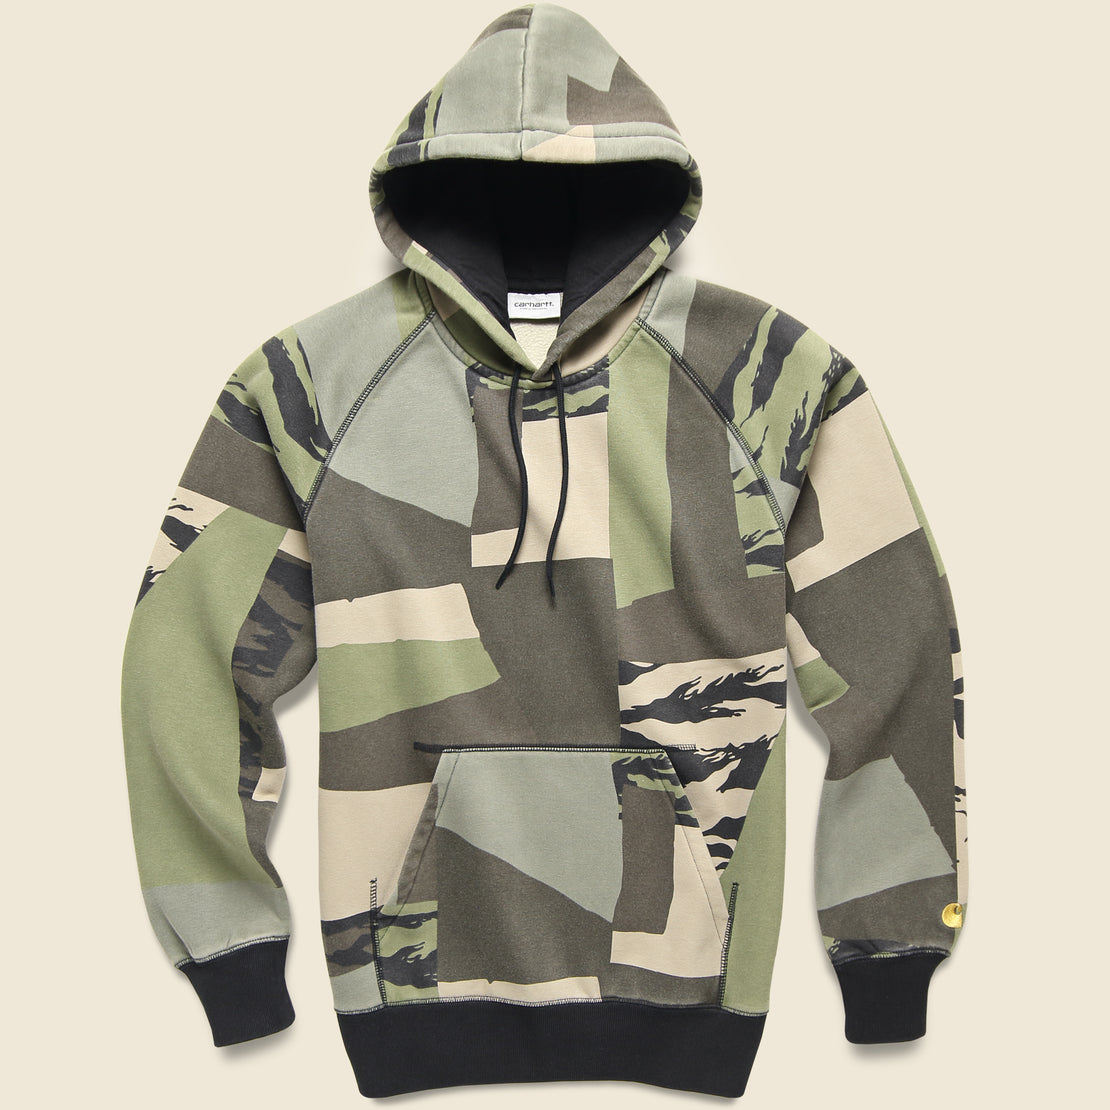 Hooded Chase Sweatshirt - Camo/Gold - Carhartt WIP - STAG Provisions - Tops - Fleece / Sweatshirt